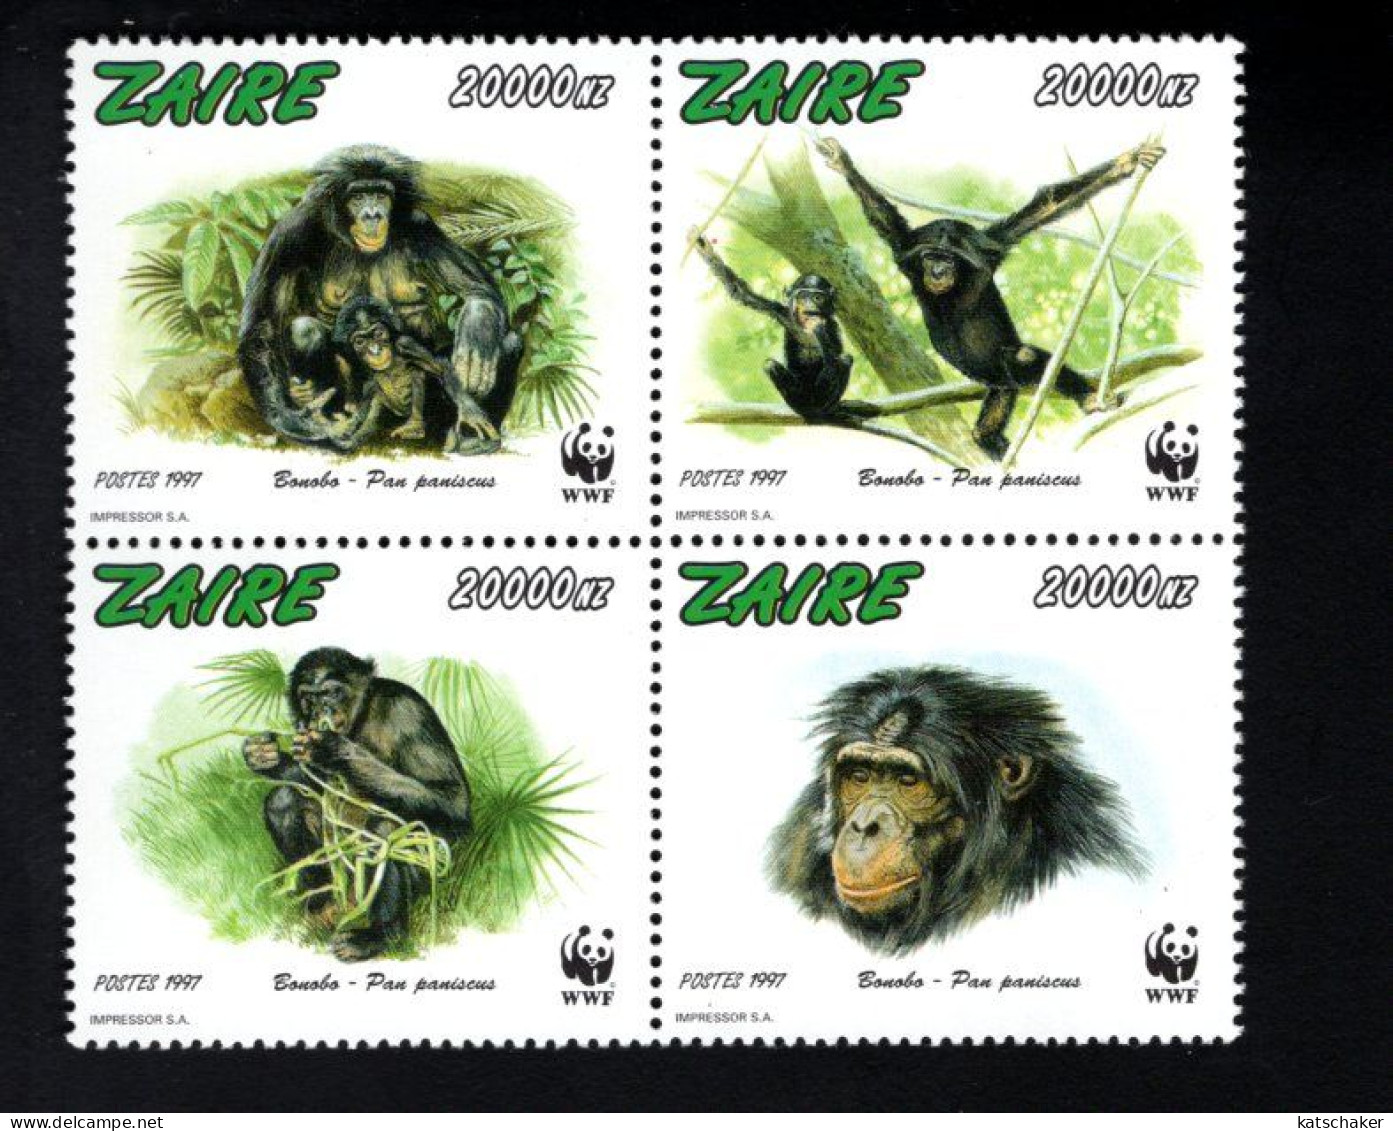 1869828765 1997 SCOTT 1466 (XX) POSTFRIS MINT NEVER HINGED  - FAUNA - MONKEYS AND W.W.F. EMBLEM - PAN PANISCUS - Unused Stamps